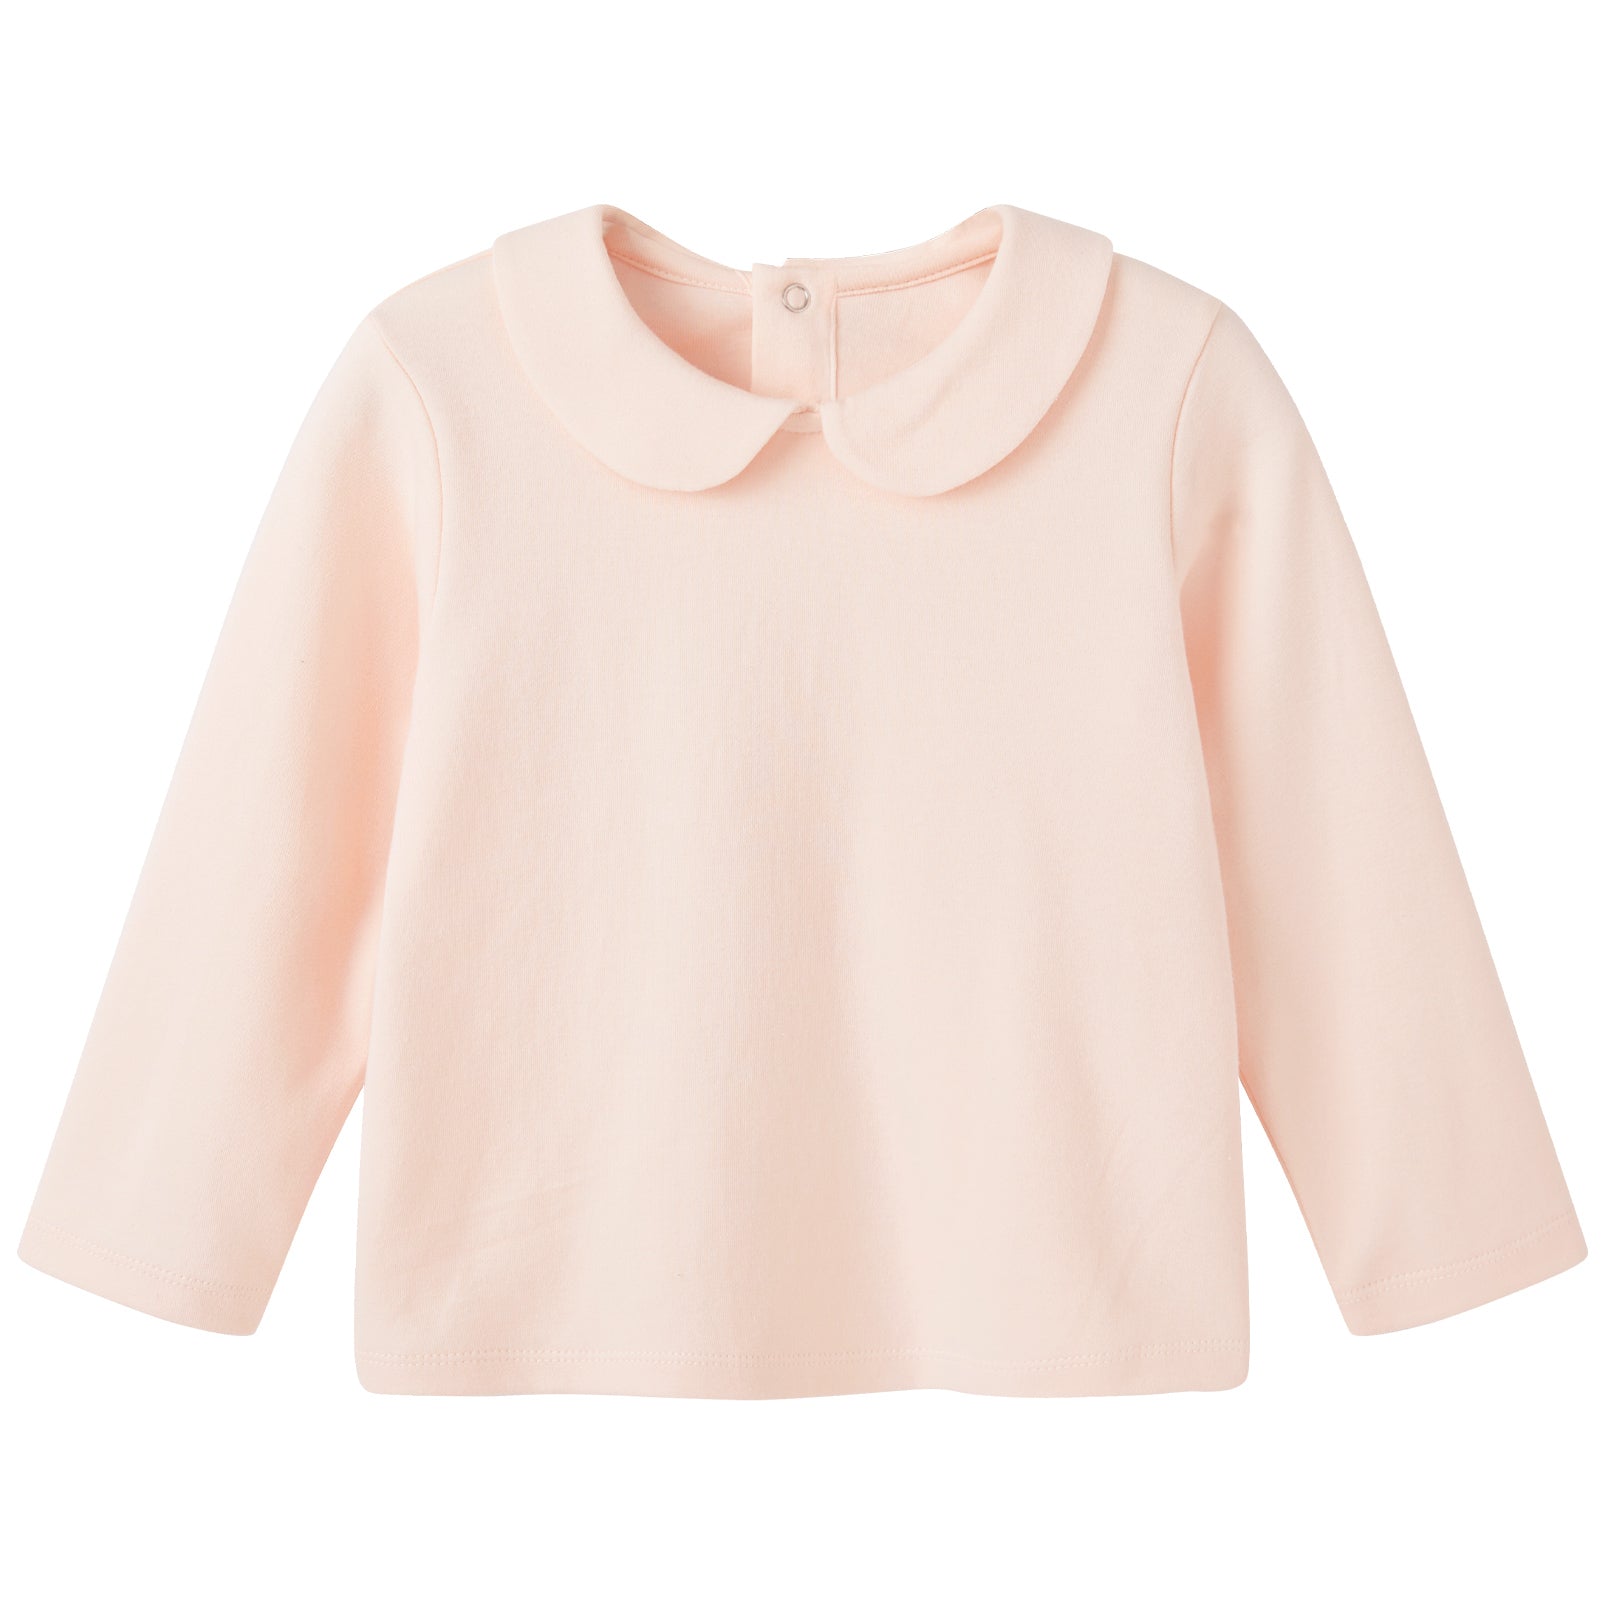 pureborn Toddler Girls Blouse Peter-pan Collar Long Sleeve Tee Shirt Cotton Shirt